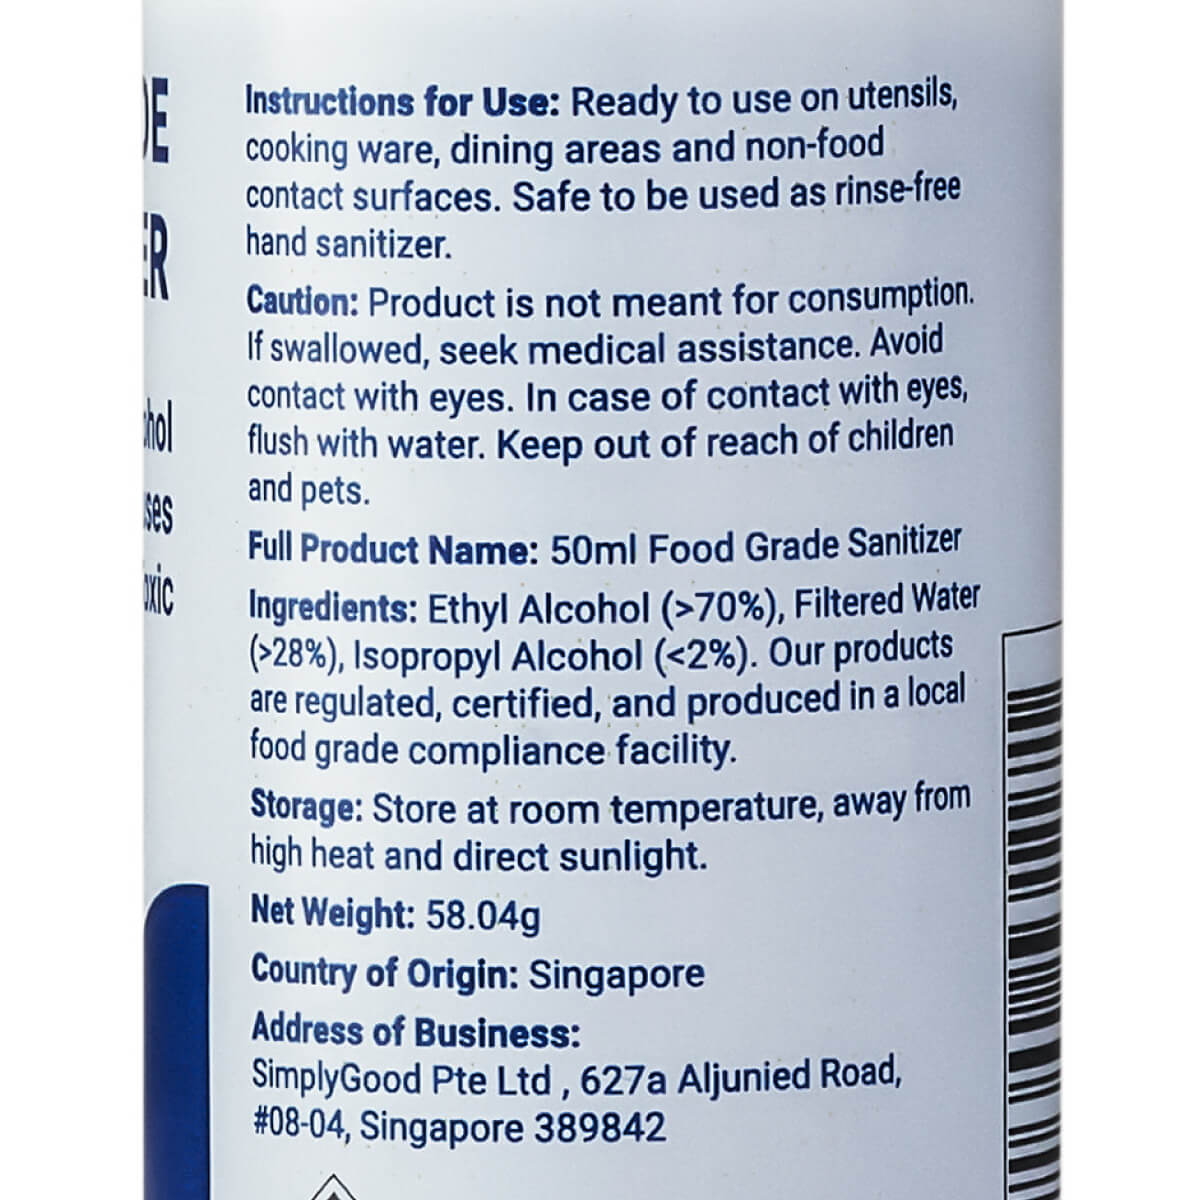 50ml Food Grade Sanitizer Spray (Set of 3)